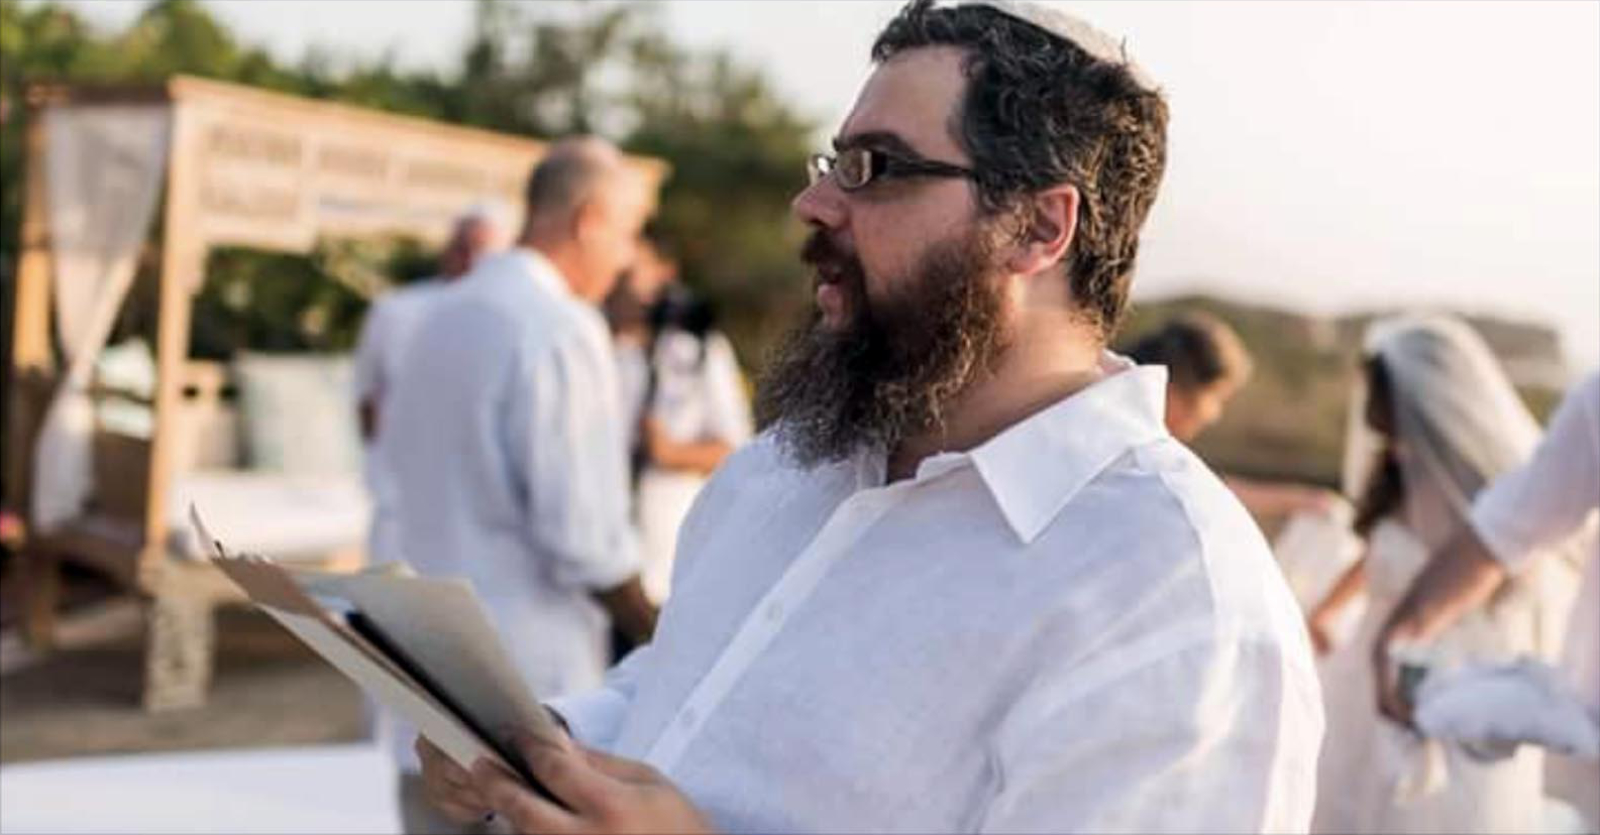 Longtime Virtual Rabbi Offers Advice on “Doing Jewish” Online